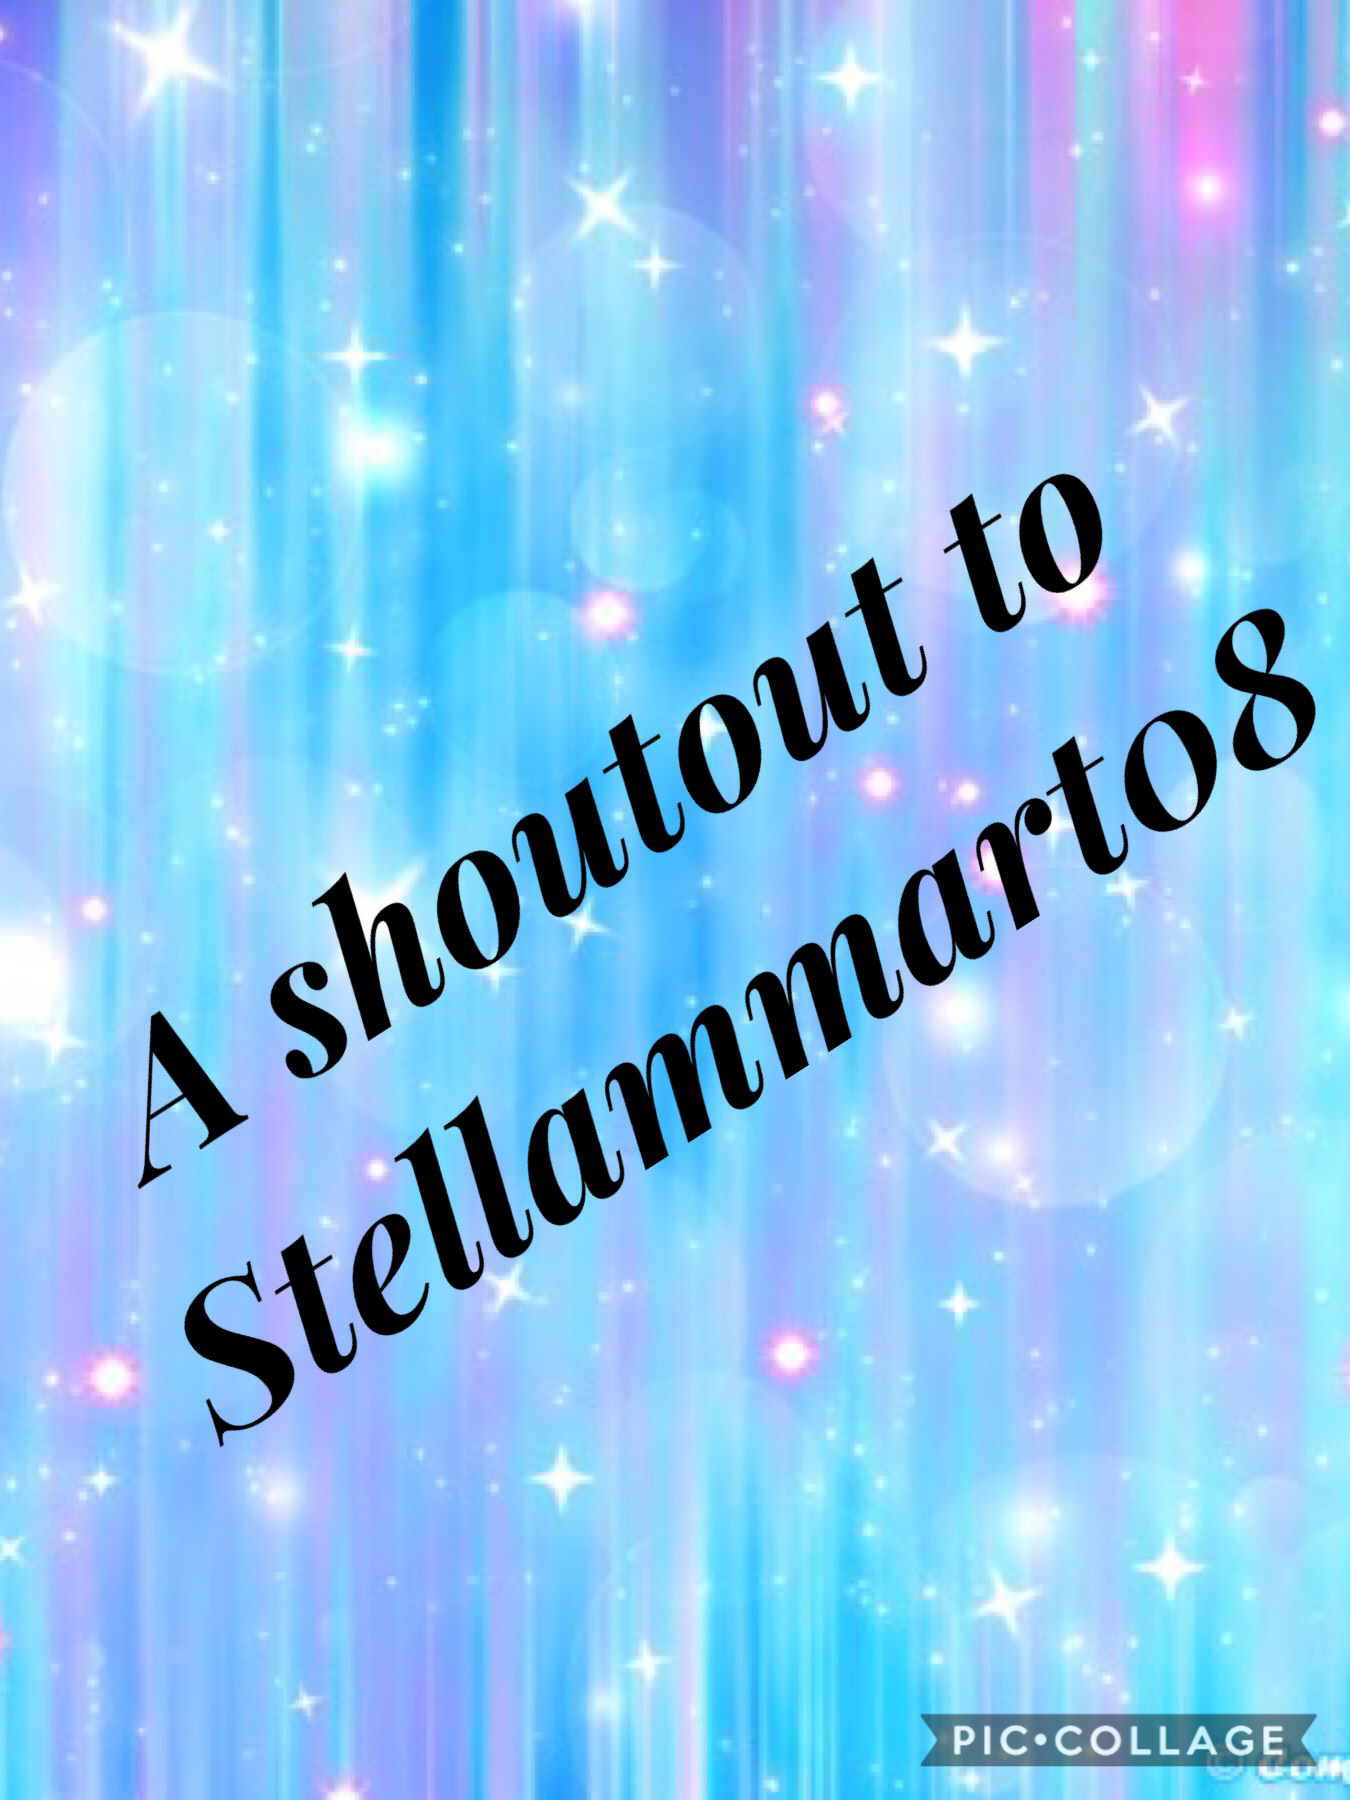 Go follow stellamart08